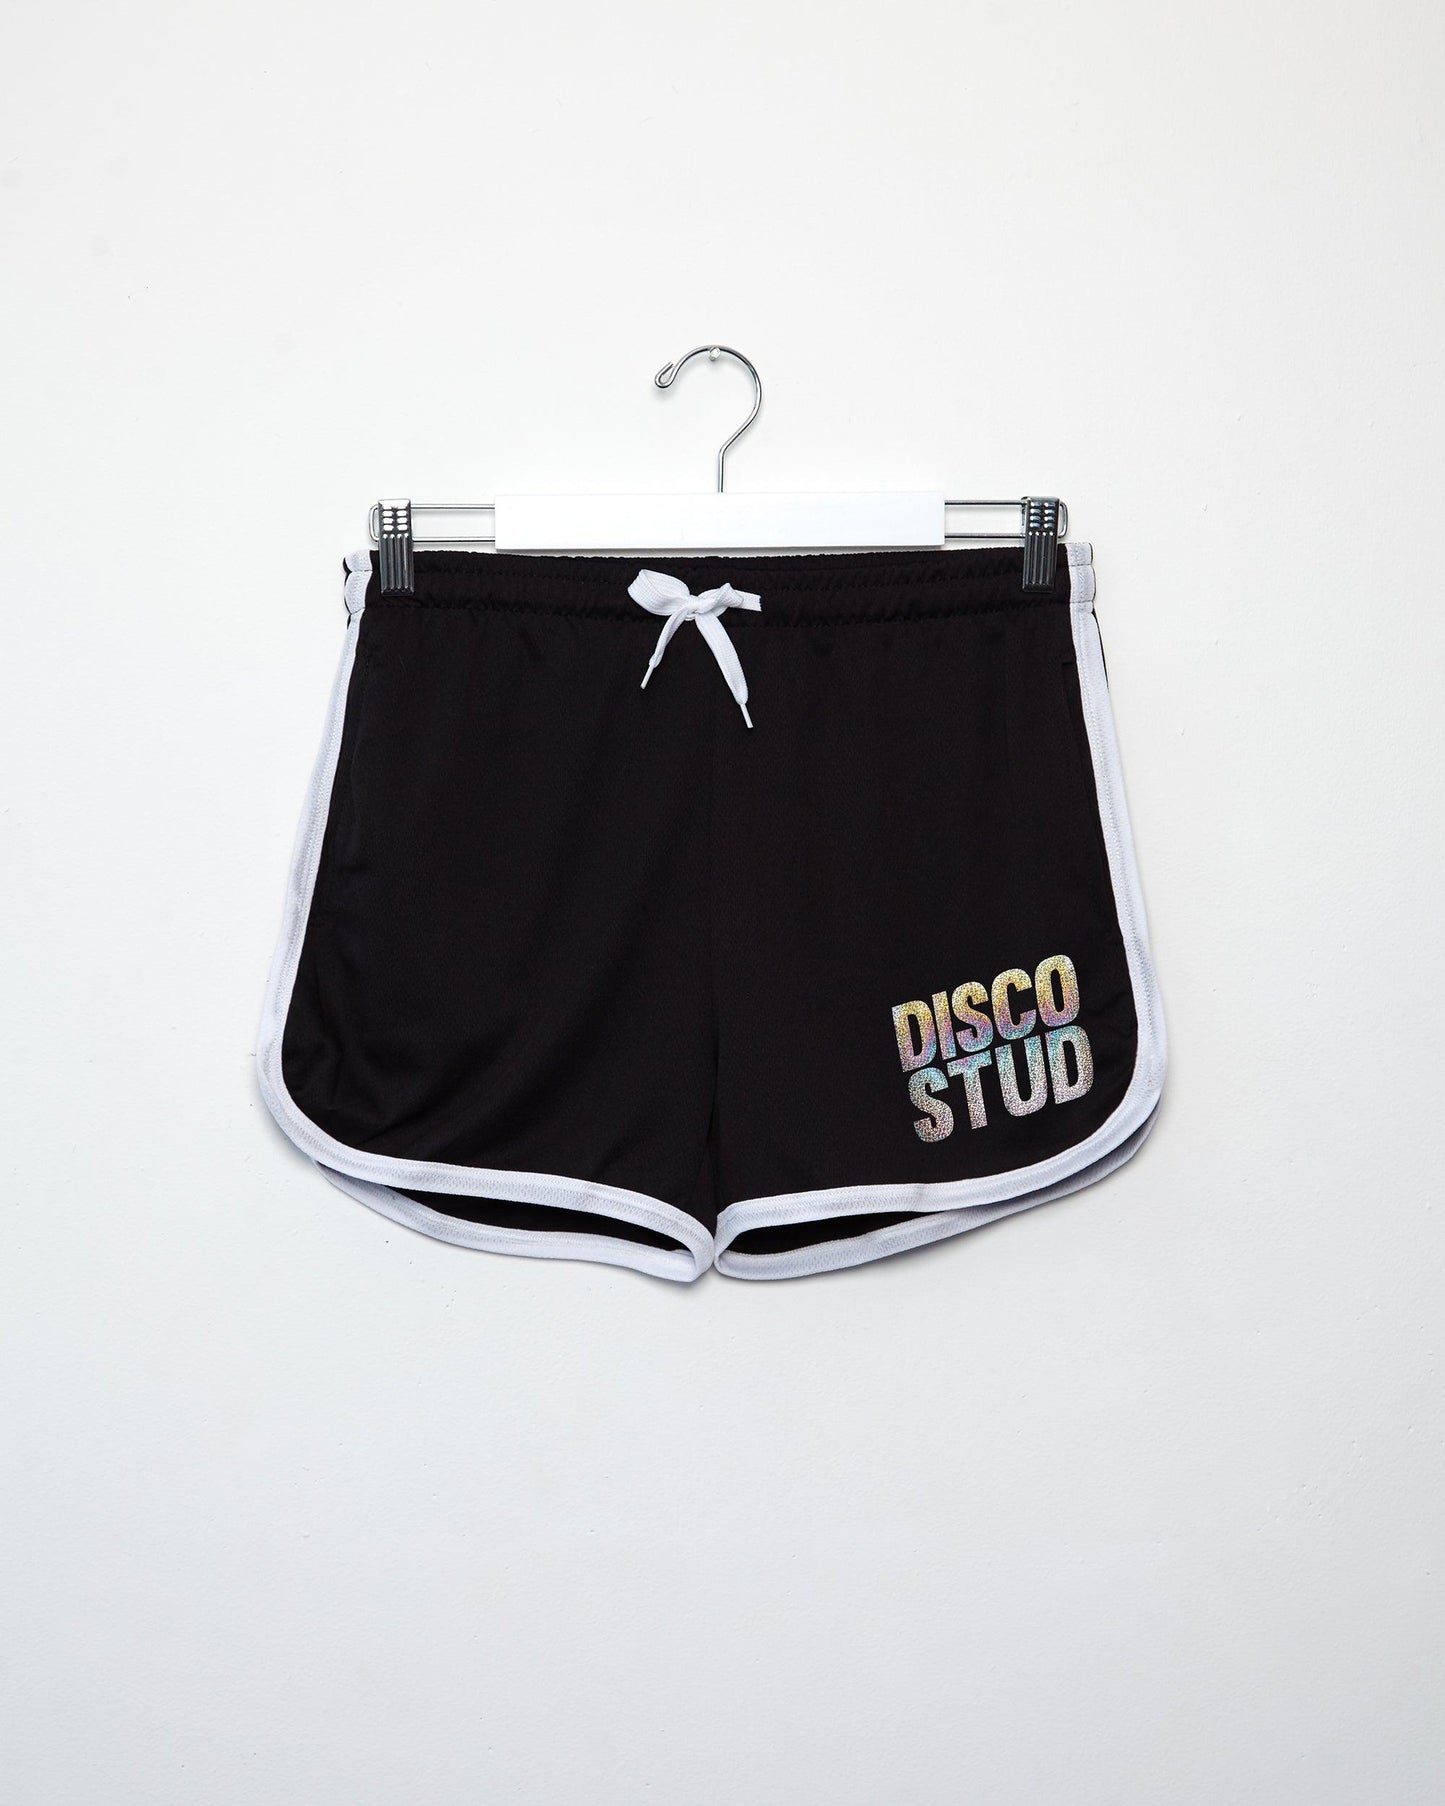 Disco stud, hologram sparkle on black - short shorts.